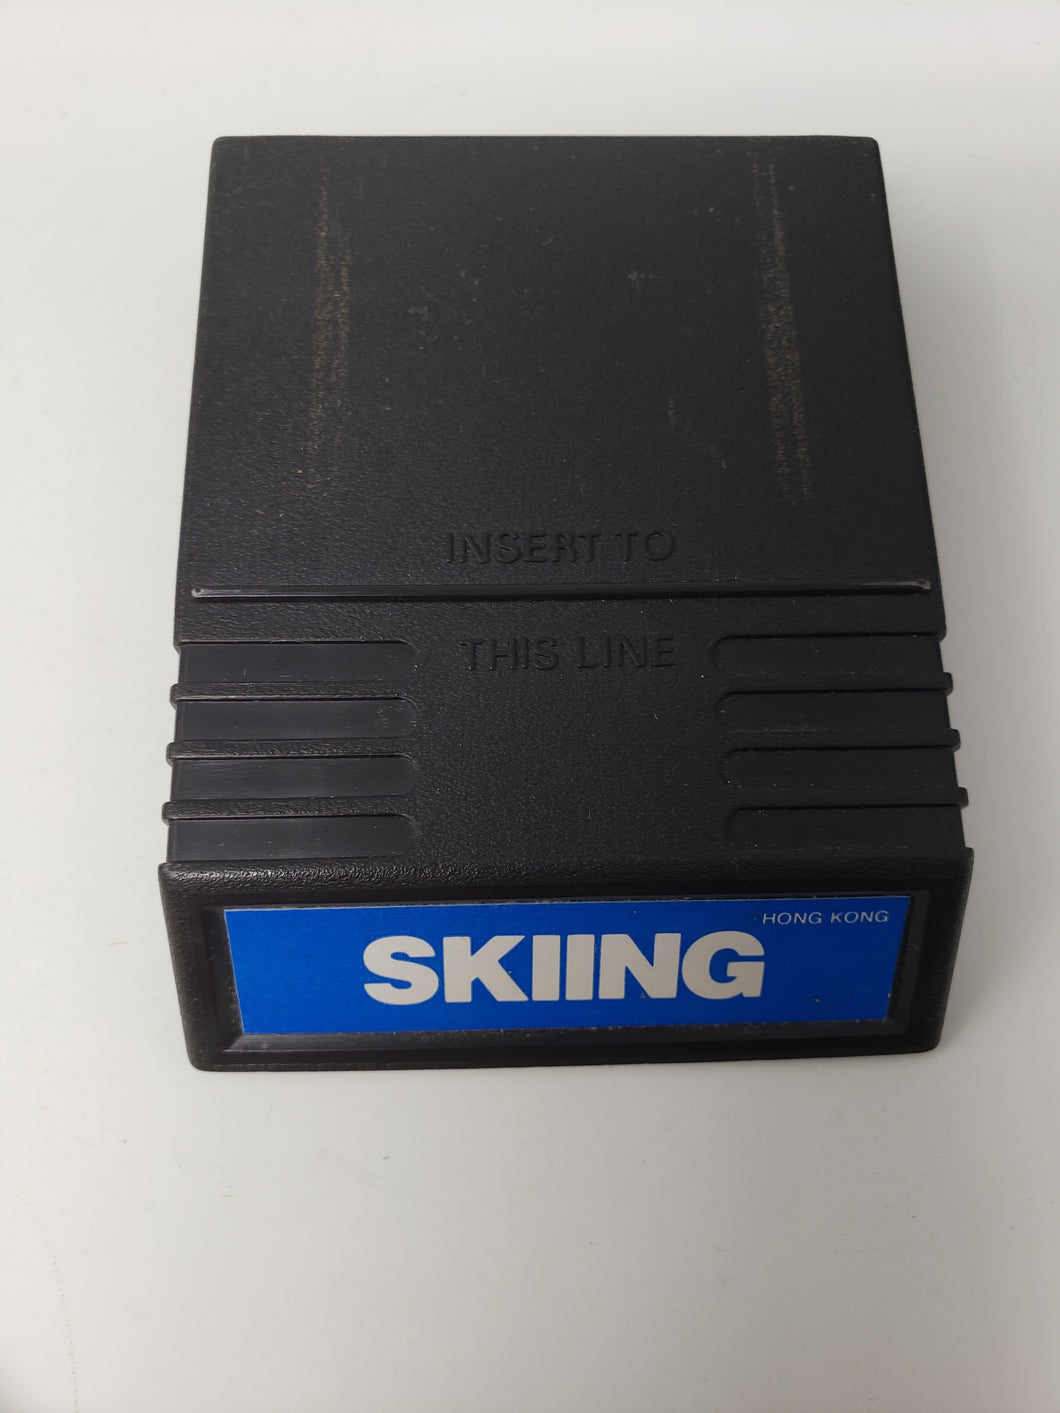 Skiing - Intellivision